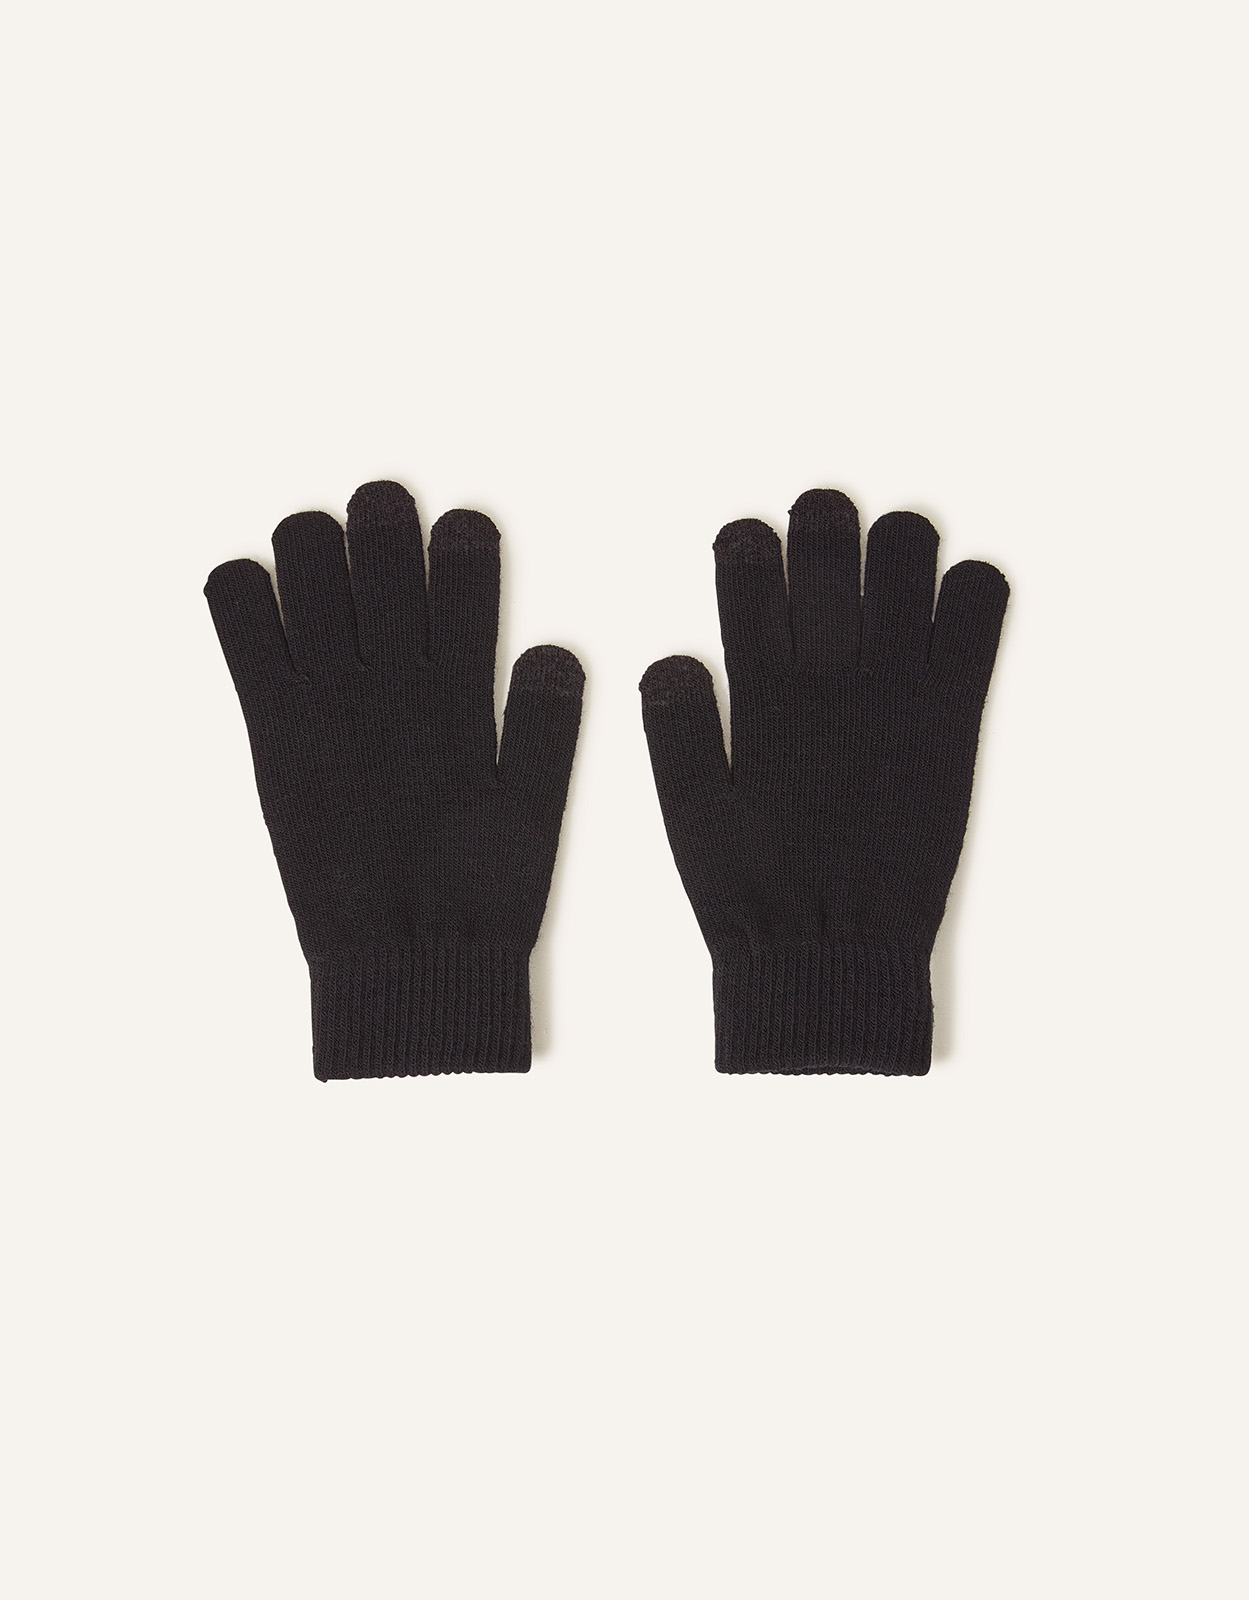 Accessorize Women's Black Super-Stretchy Touchscreen Gloves, Size: 20x9cm